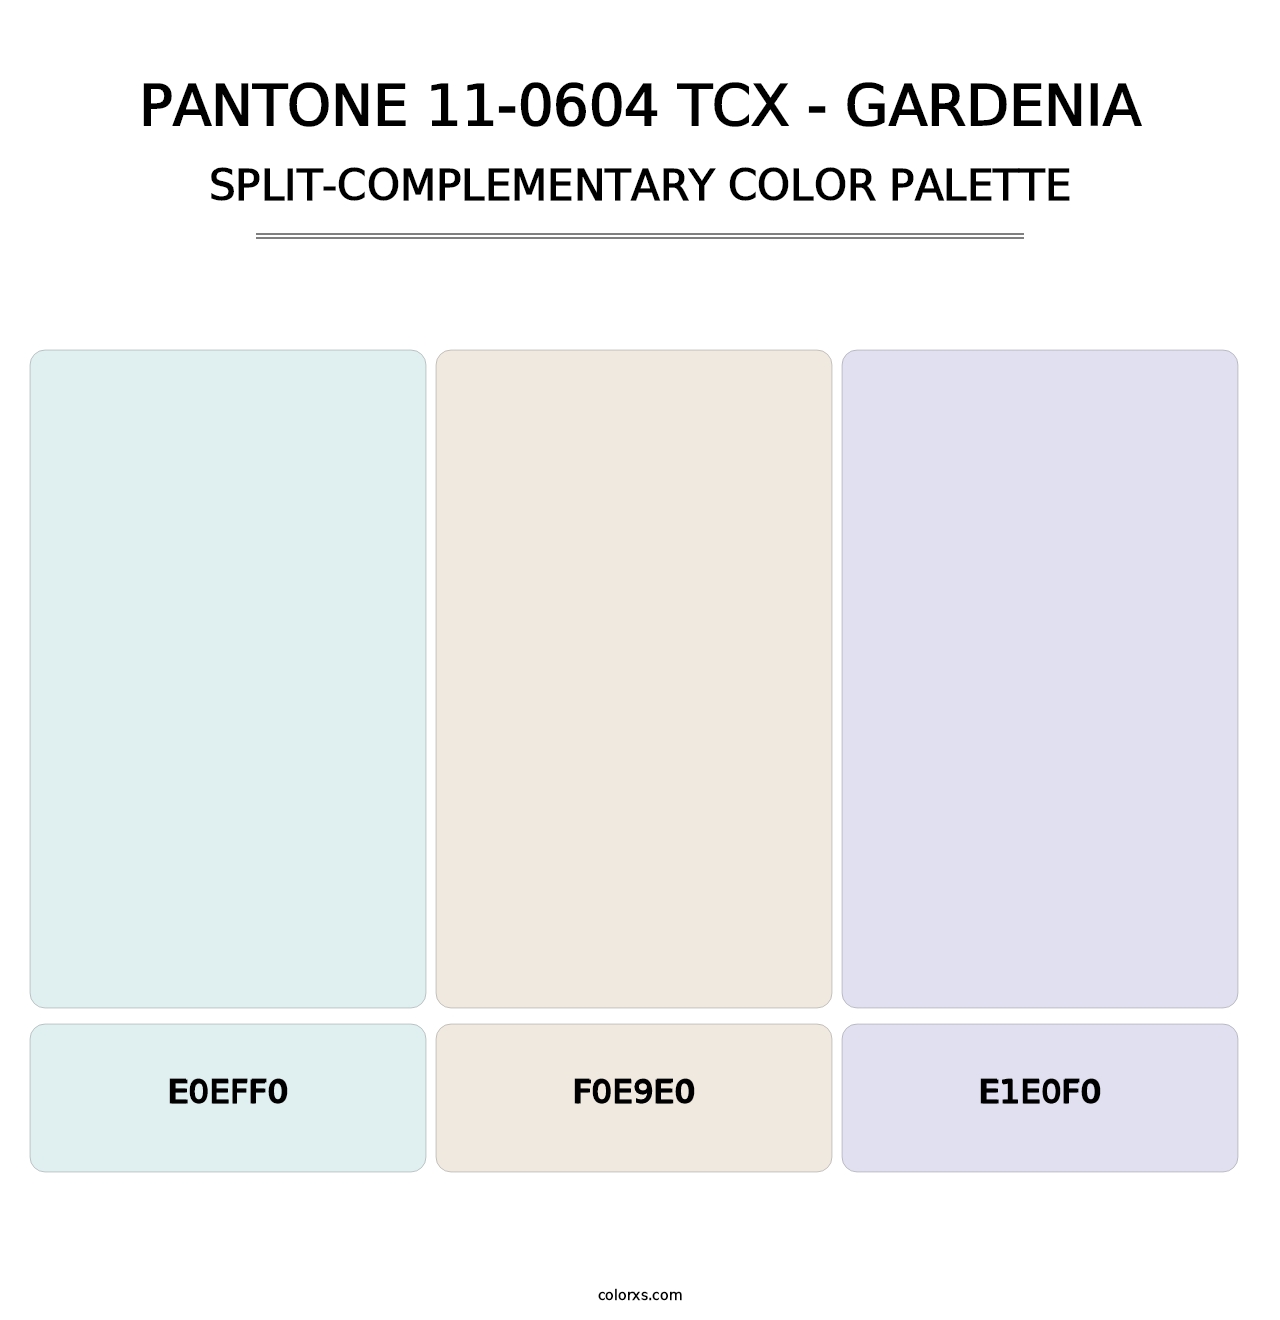 PANTONE 11-0604 TCX - Gardenia - Split-Complementary Color Palette